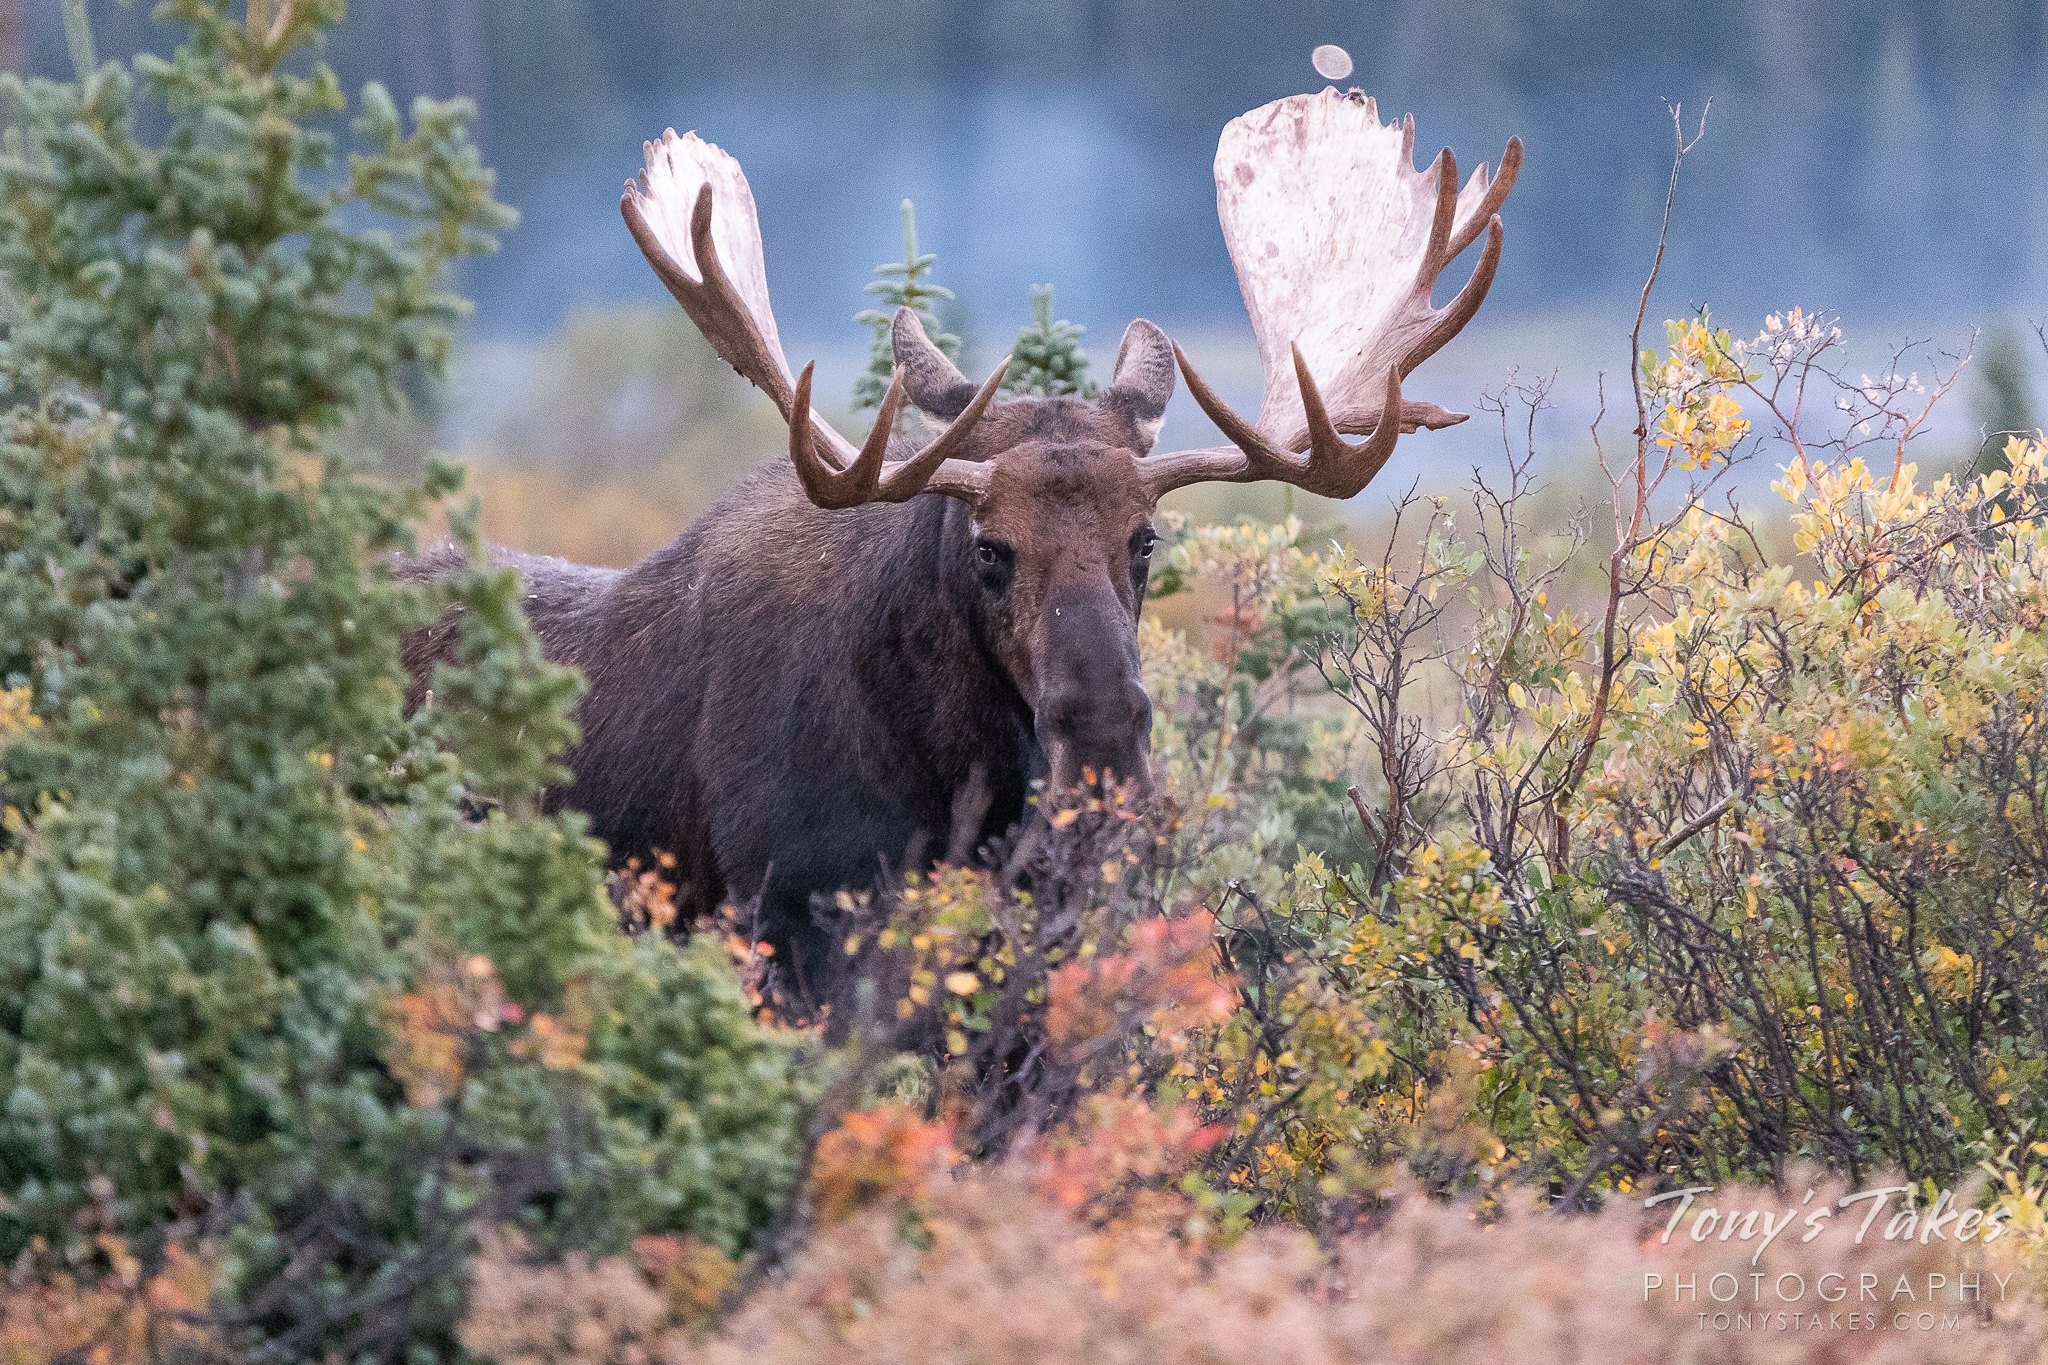 Bull moose at dusk